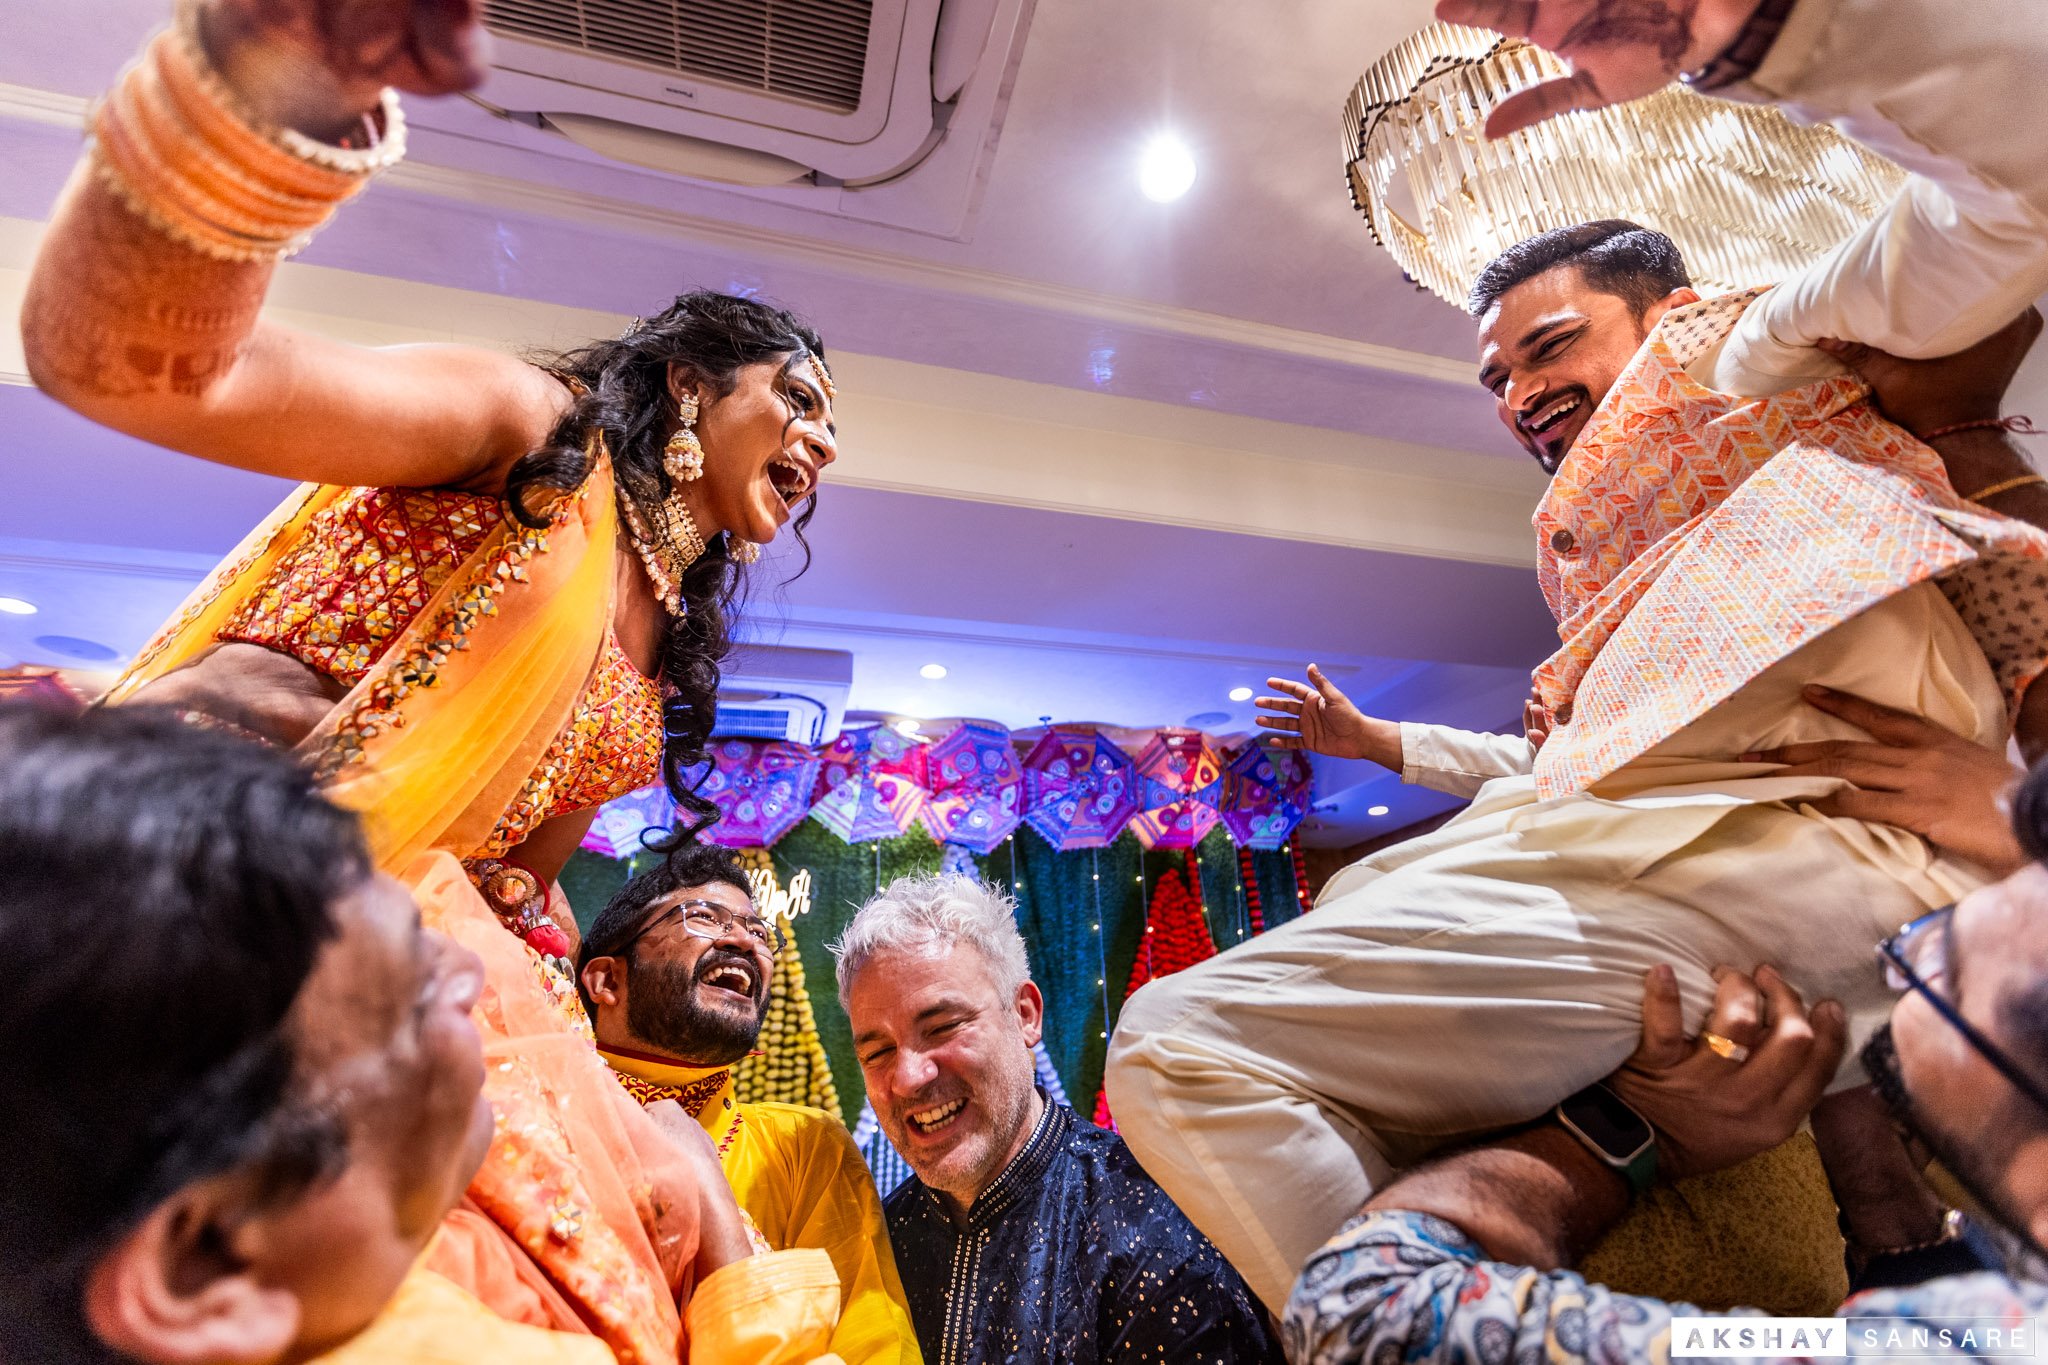 Lipika x Bhavya Compress Akshay Sansare Photography & Films Best wedding photographers in mumbai india-14.jpg